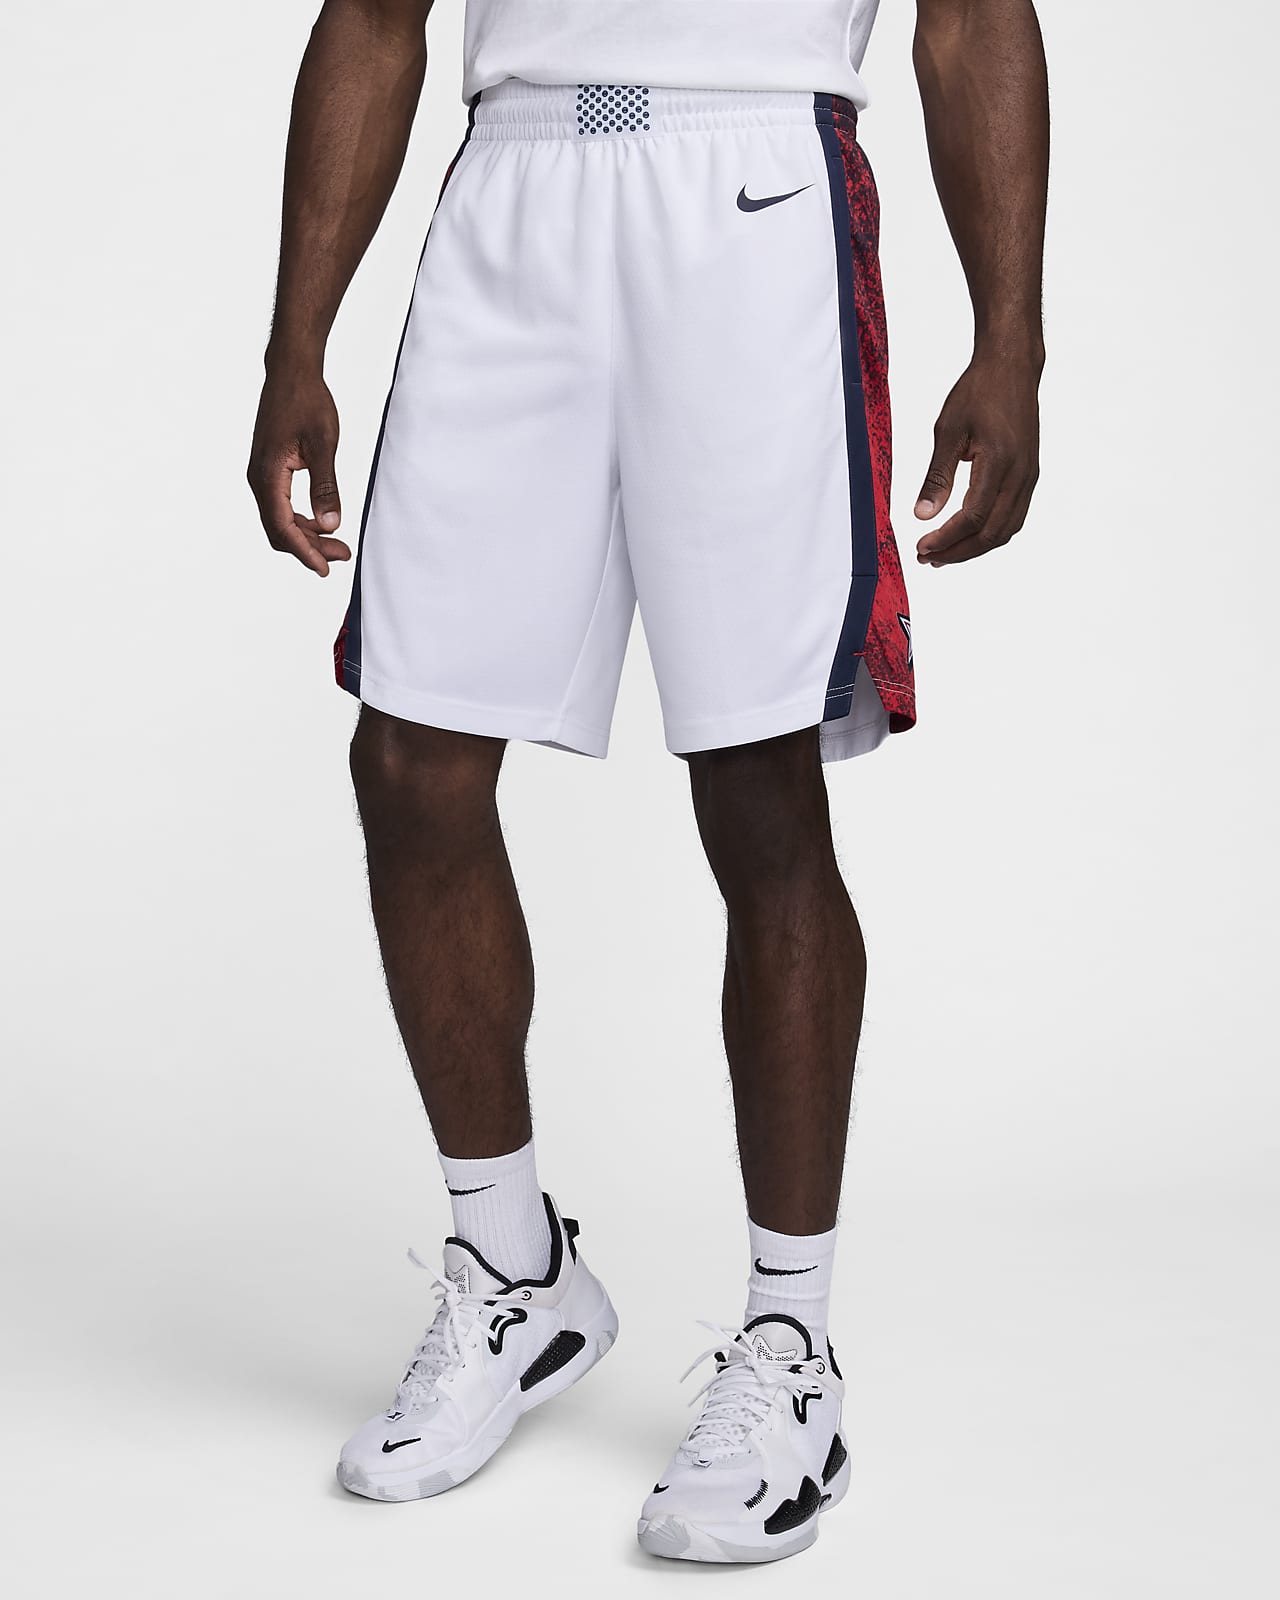 EUA Limited Home Pantalons curts de bàsquet Nike - Home